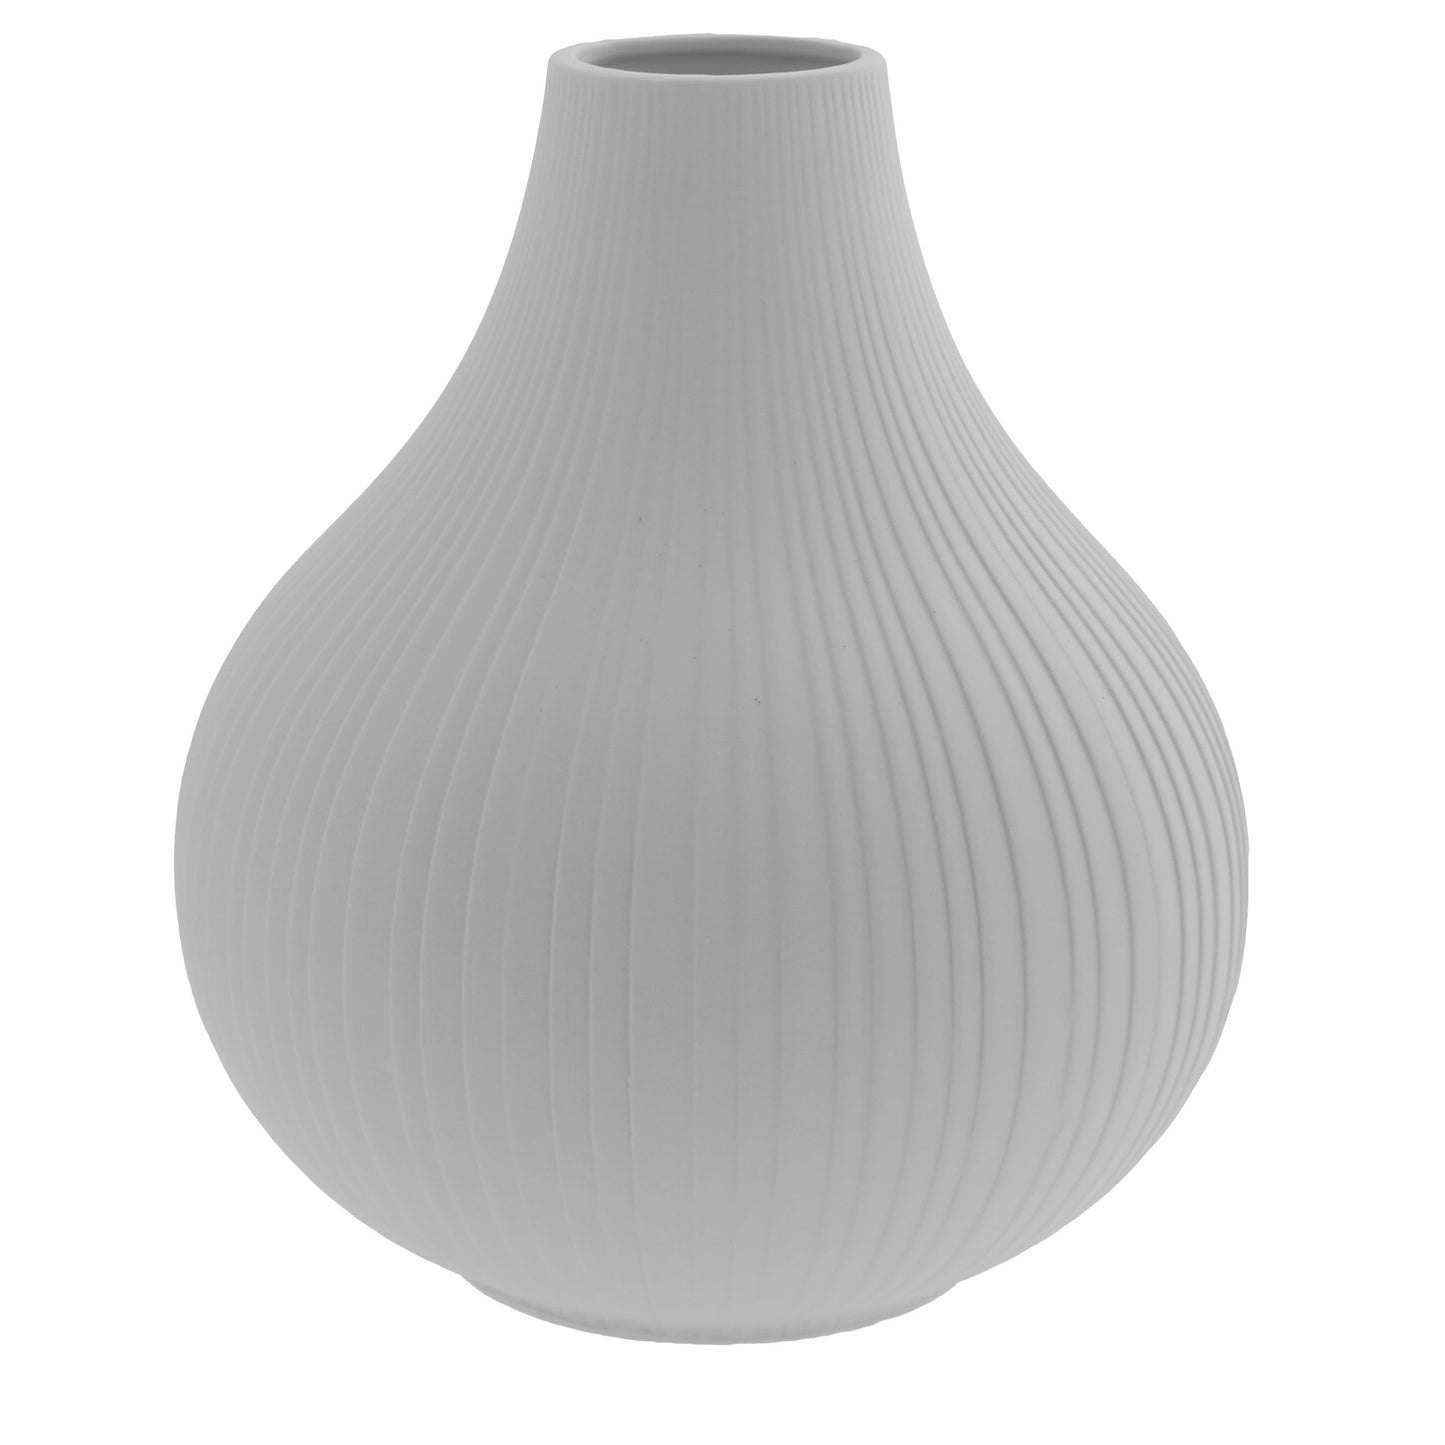 Storefactory Vase Ekenäs Keramik hellgrau, monochrome-home Buxtehude